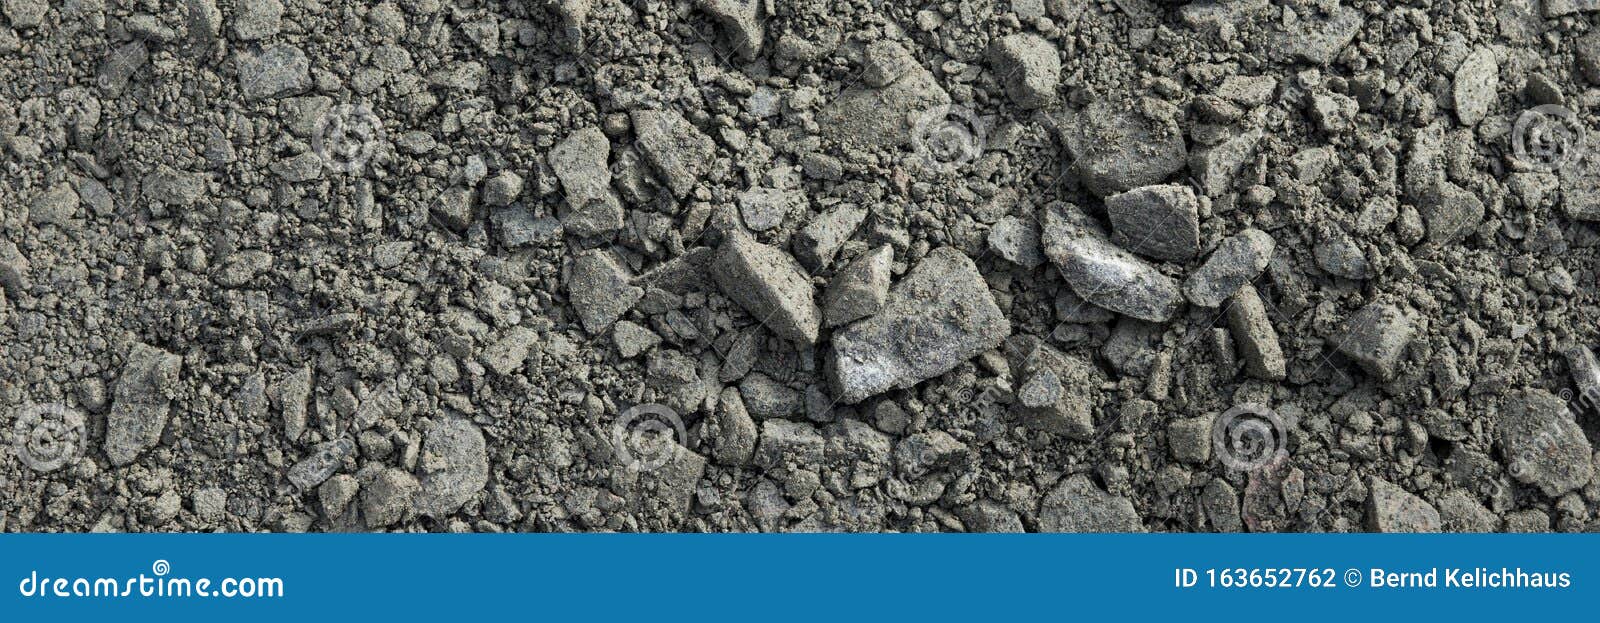 Dark Gray Gravel Stones for the Underground Stock Photo - Image of ...